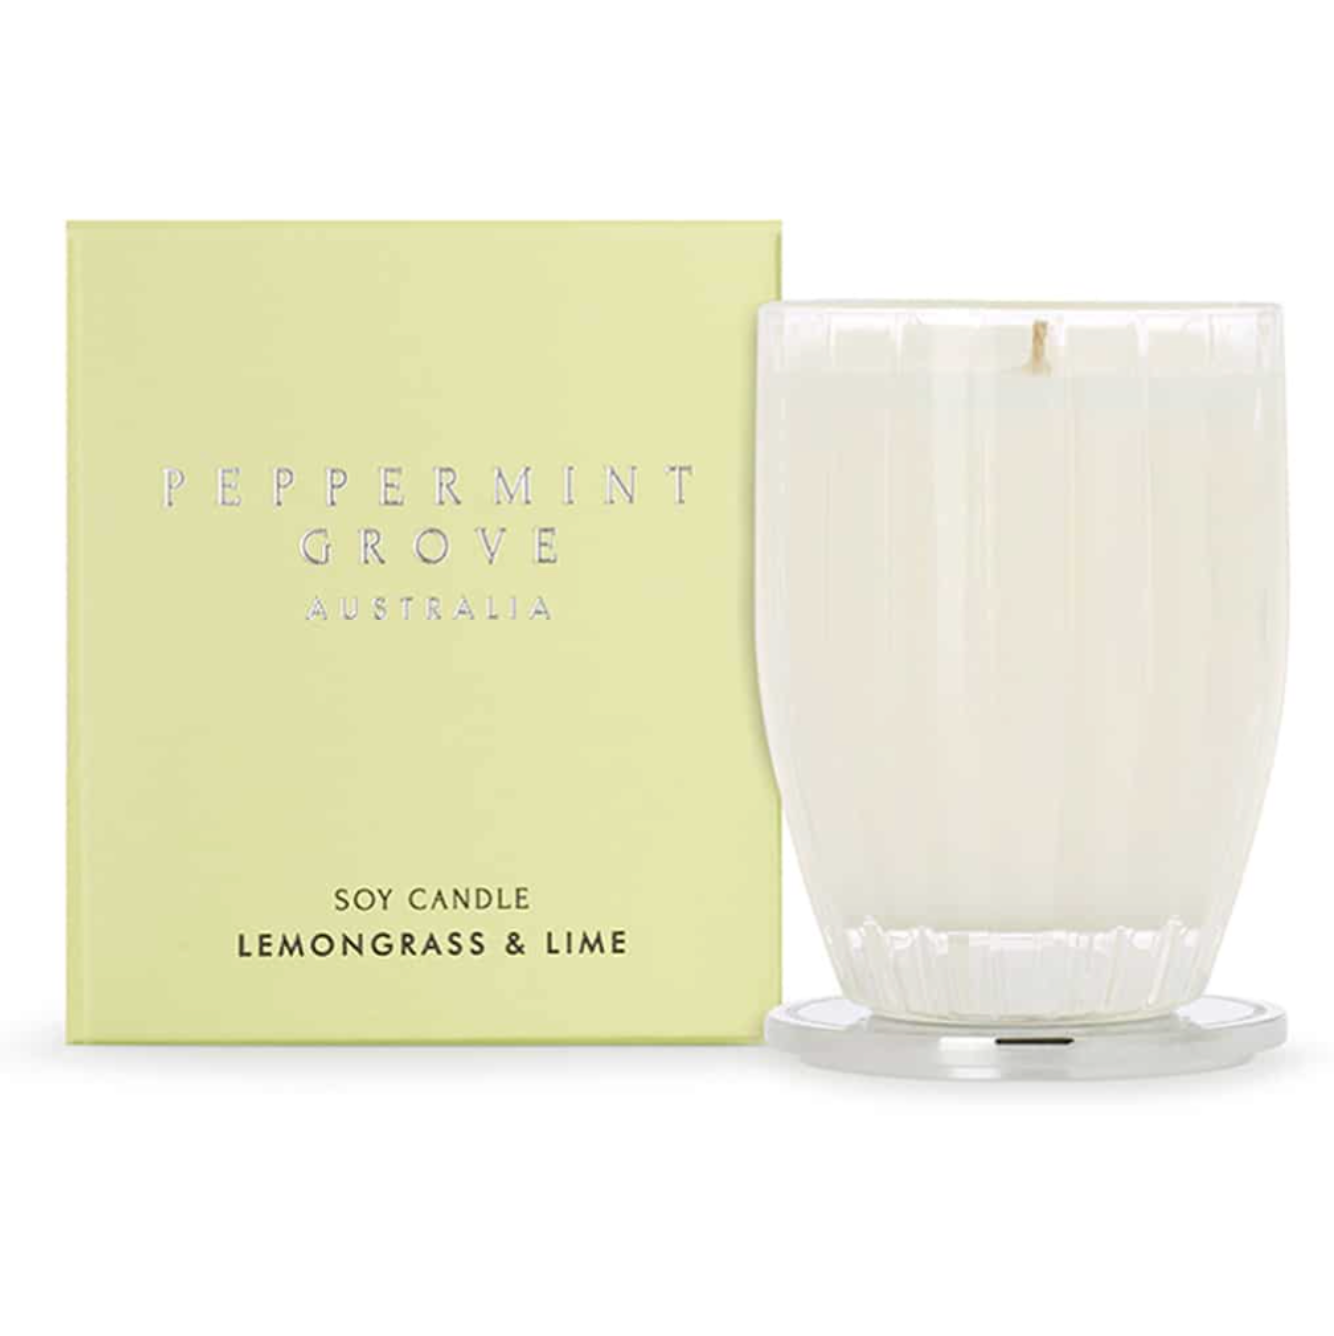 Peppermint Grove Lemongrass & Lime Candle 200g